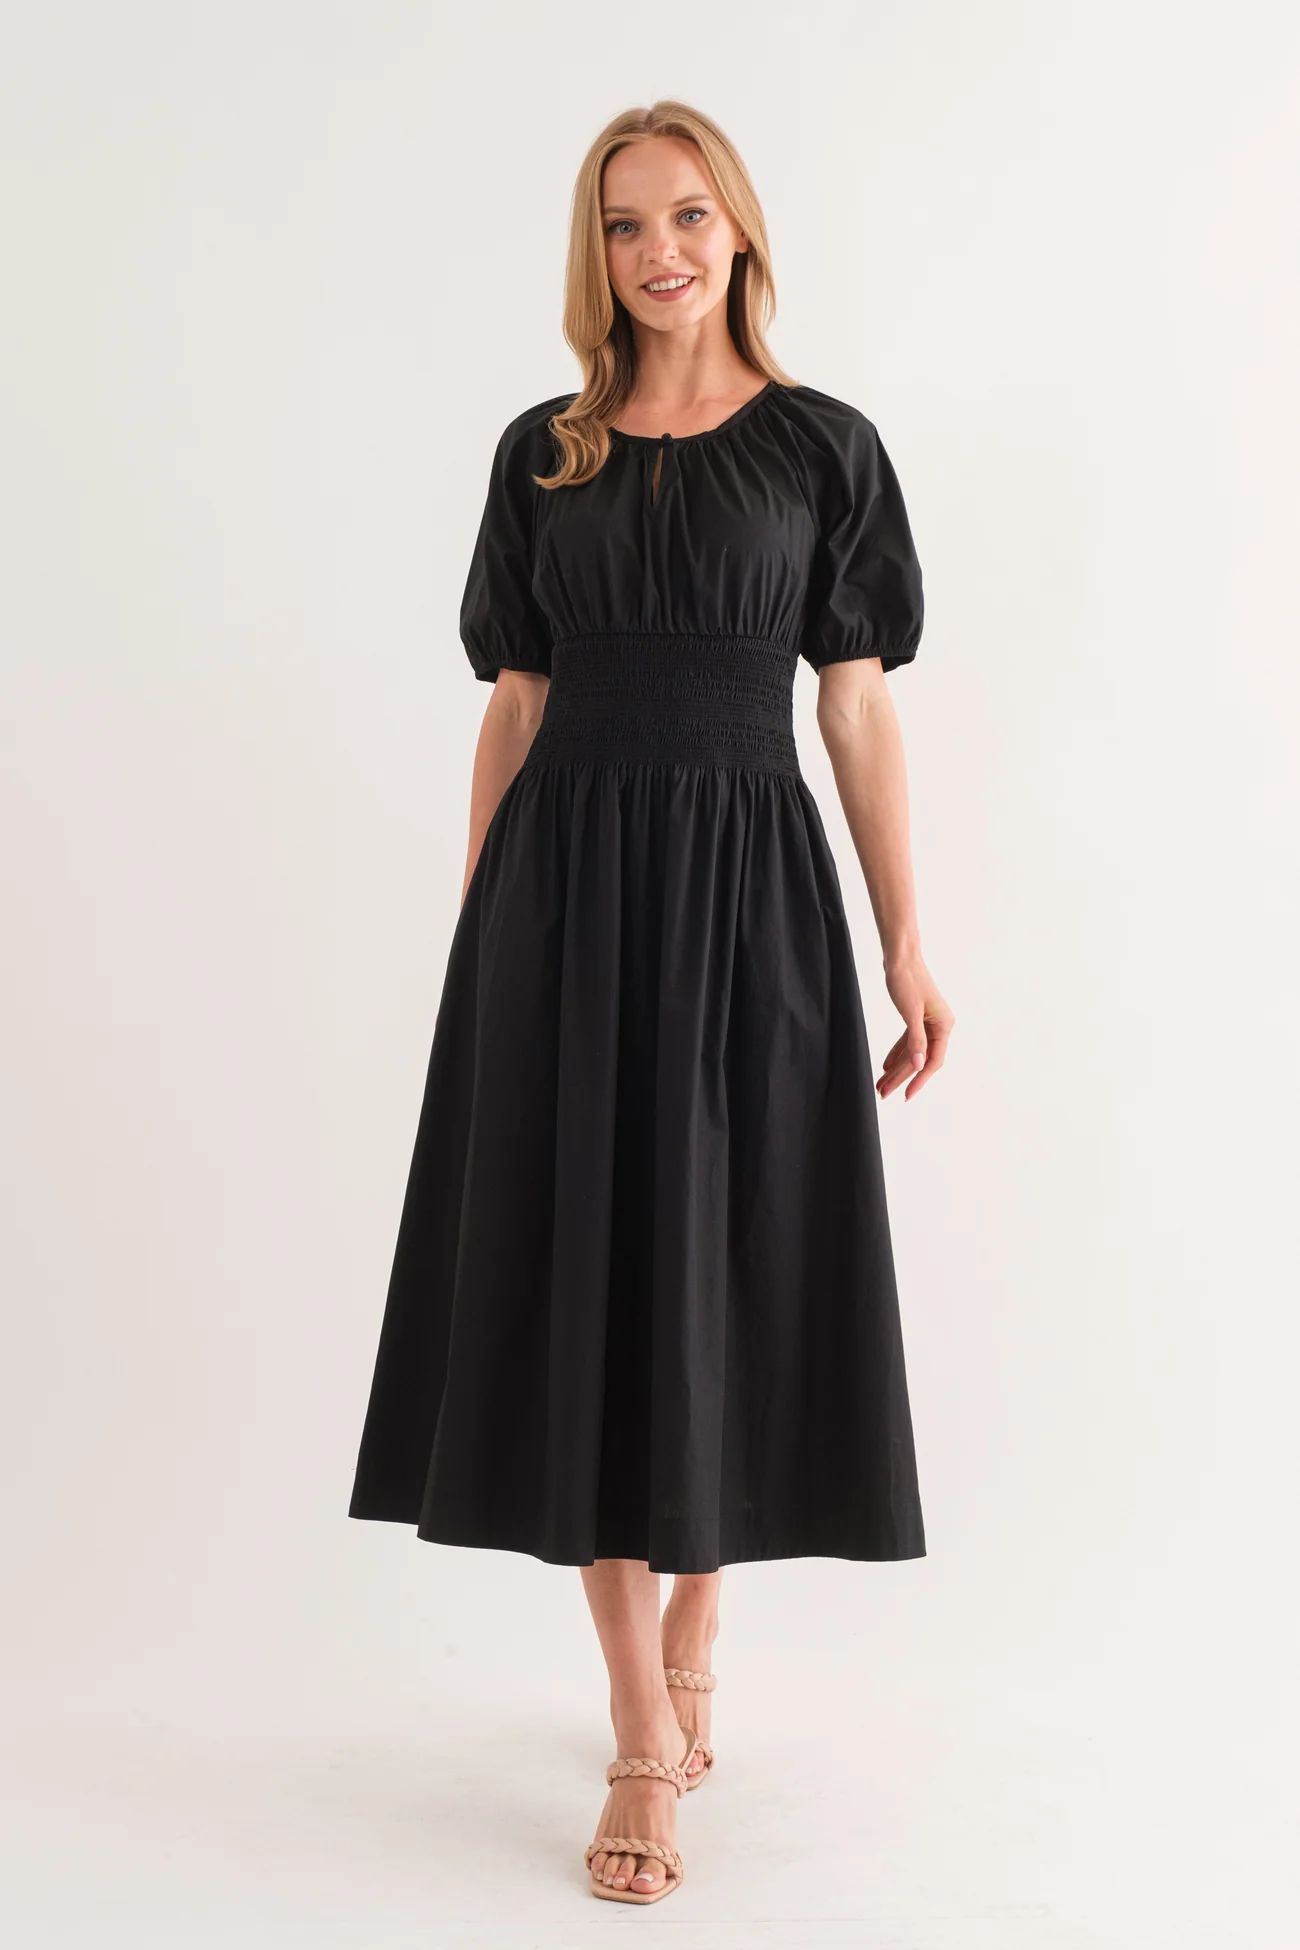 Black Smocked Dress | PinkBlush Maternity